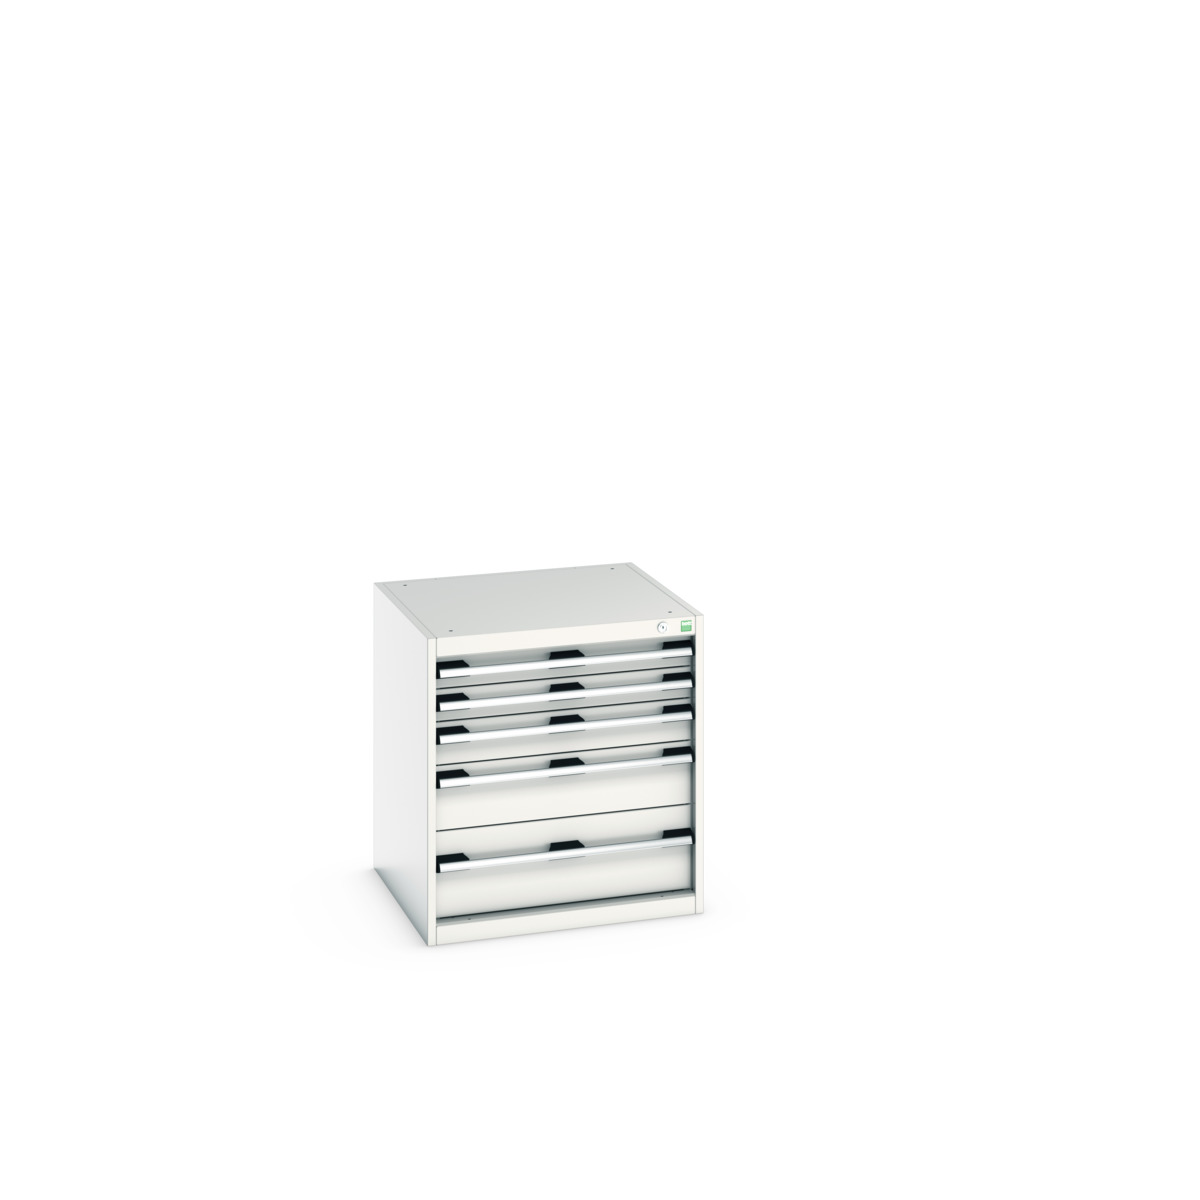 40019027.16V - cubio armoire à tiroirs SL-667-5.1